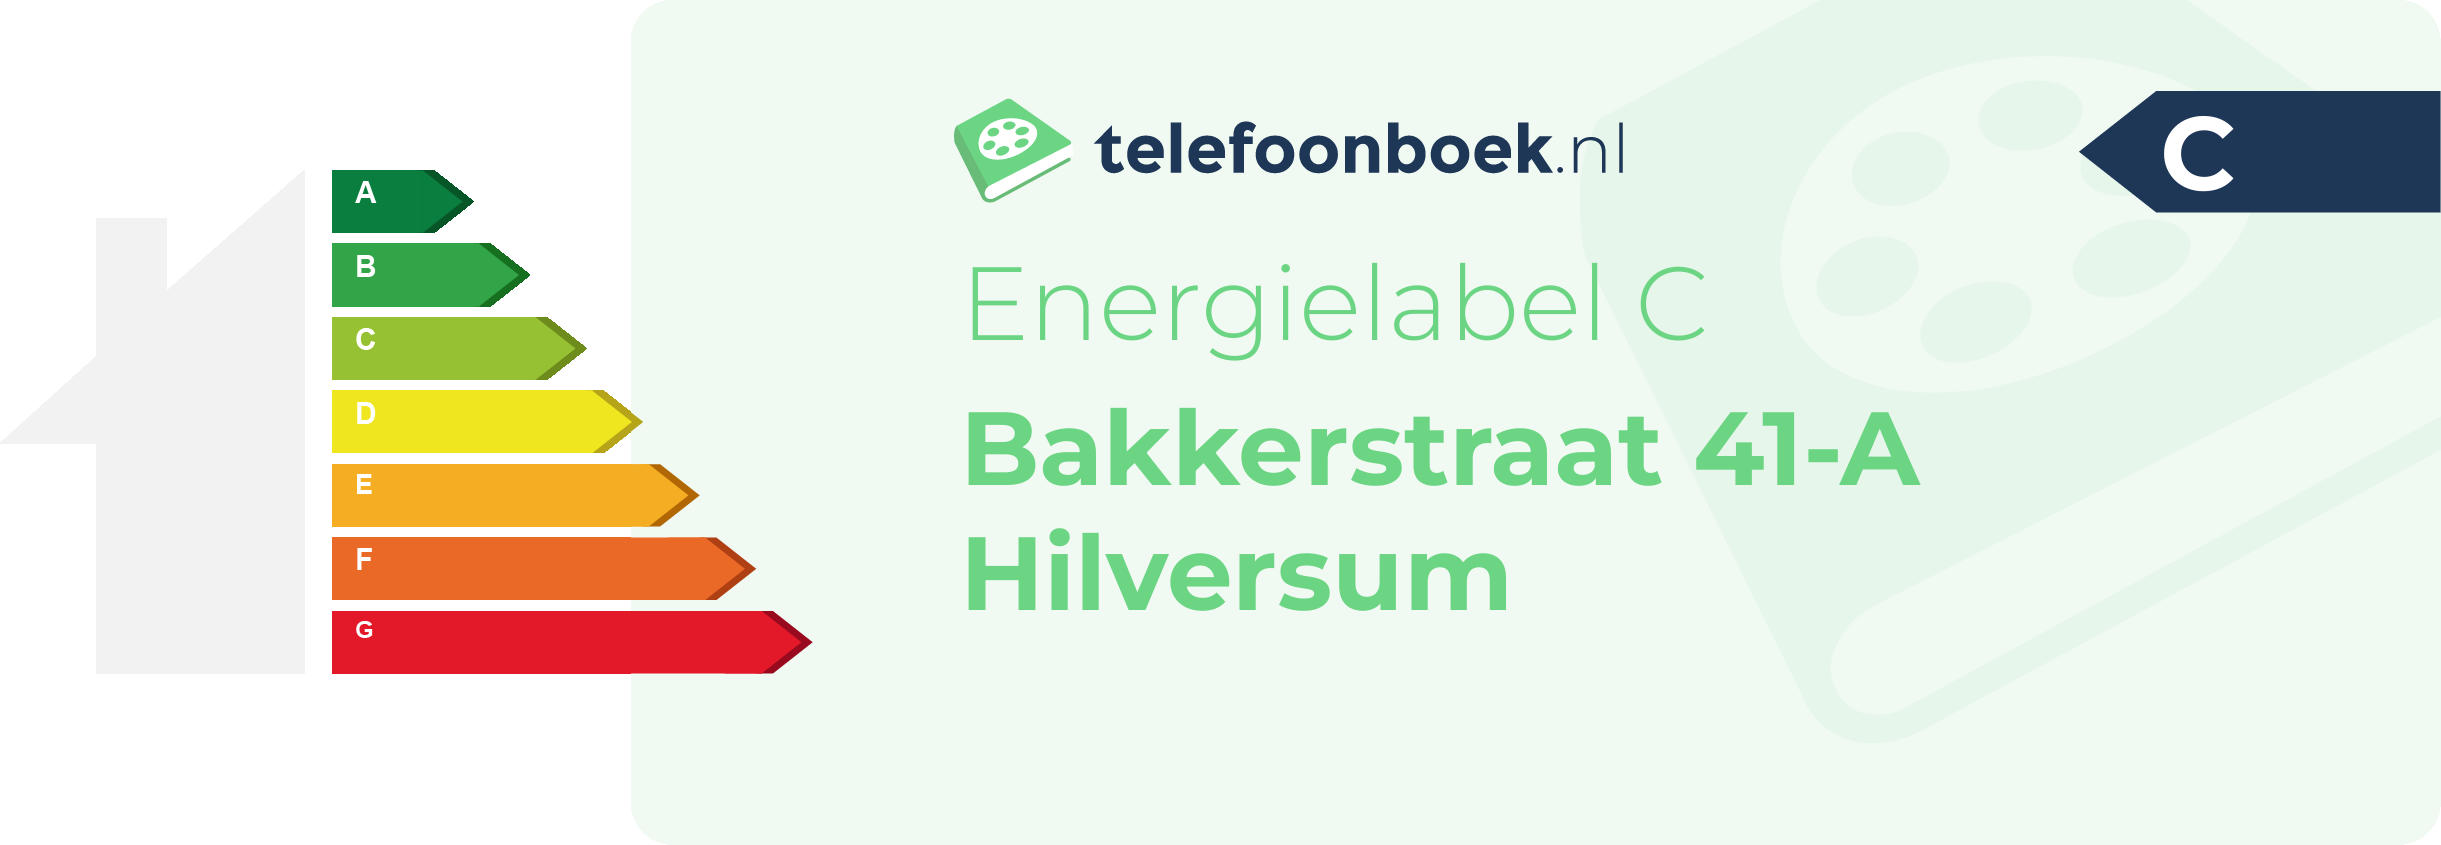 Energielabel Bakkerstraat 41-A Hilversum